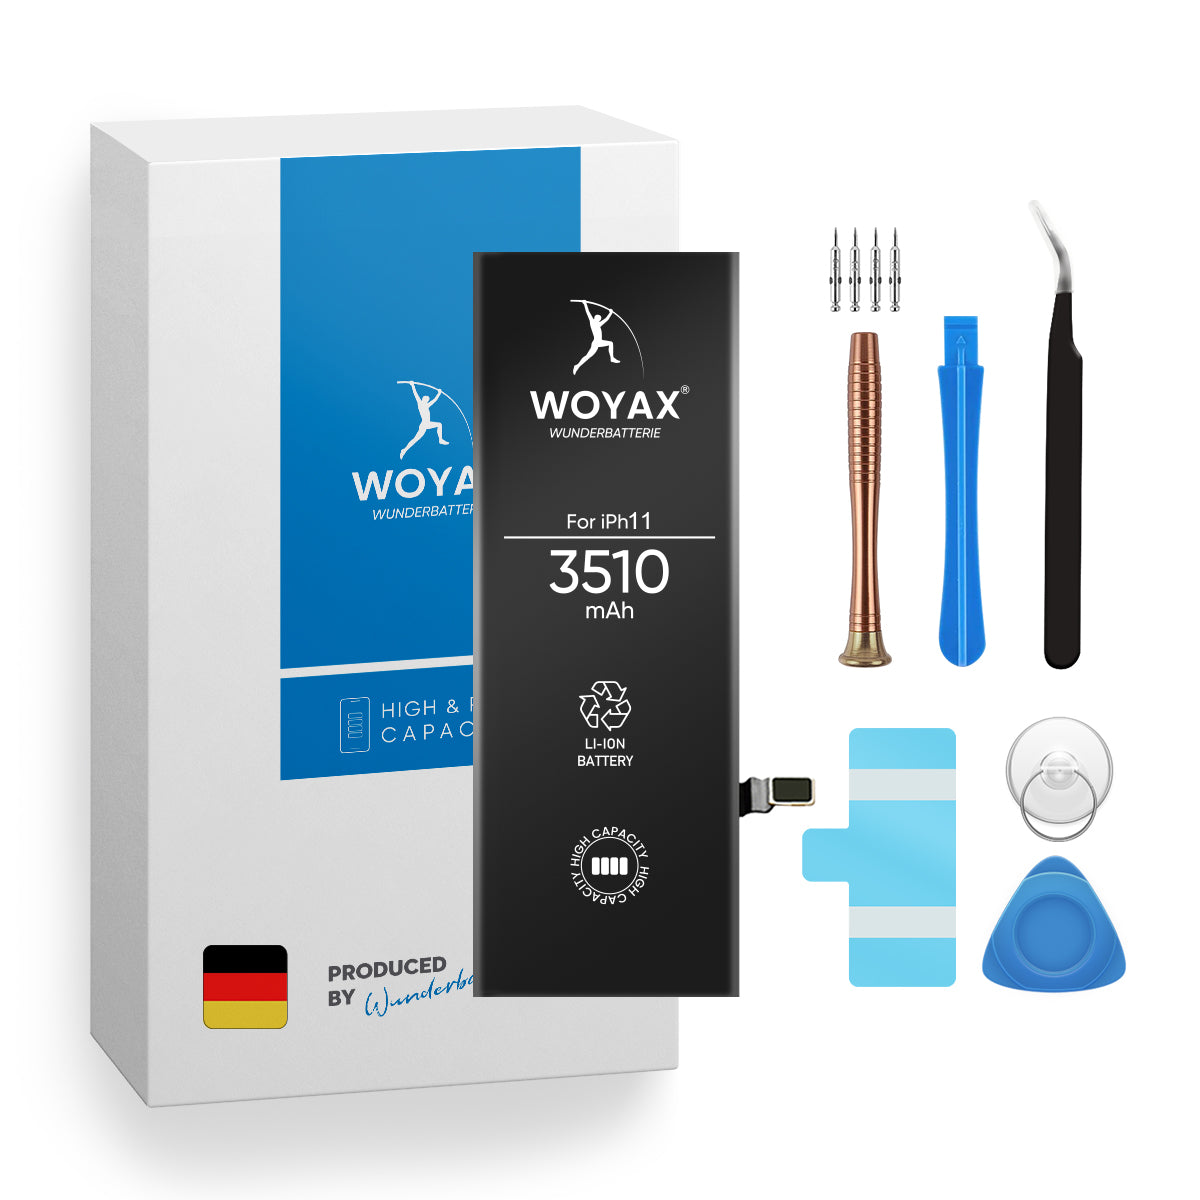 WOYAX Wunderbatterie Akku für iPhone 3.83 Ersatzakku 11 3510mAh Kapazität Li-Ionen Volt, Handy-Akku, Hohe